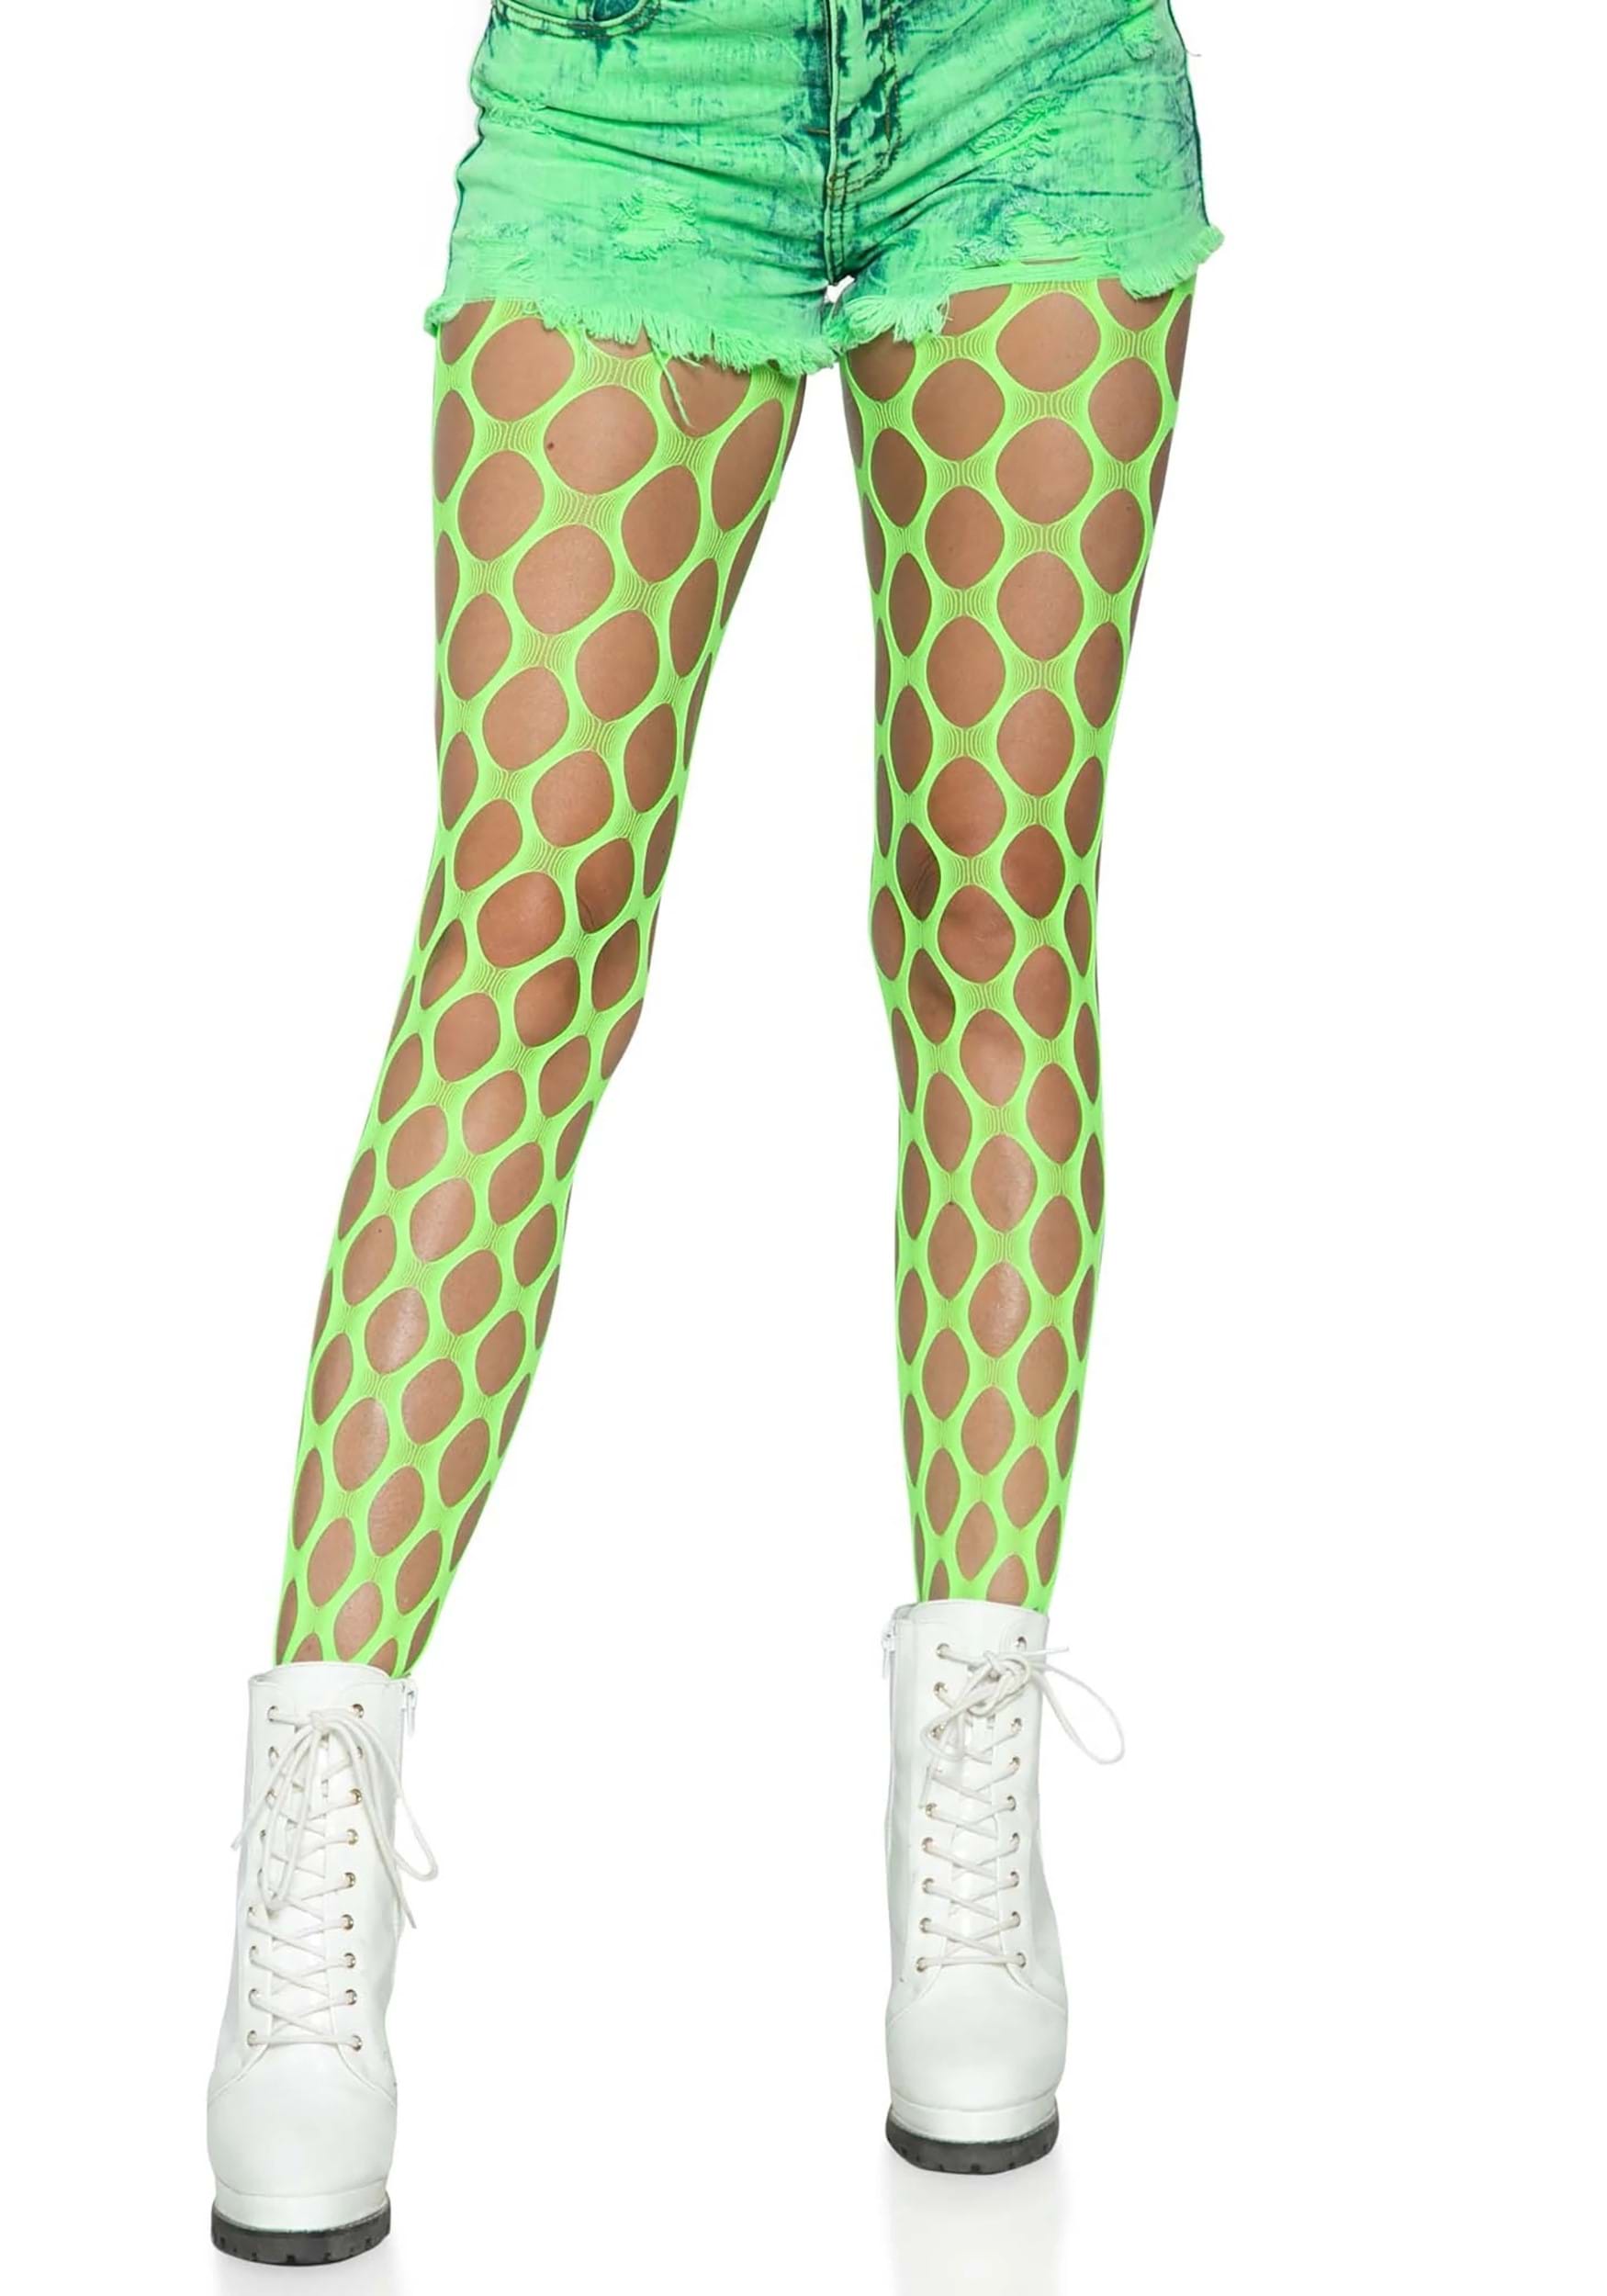 Neon Green Tights Pantyhose 80s Retro Costume Accessory Women's Hosiery One  Size - www.